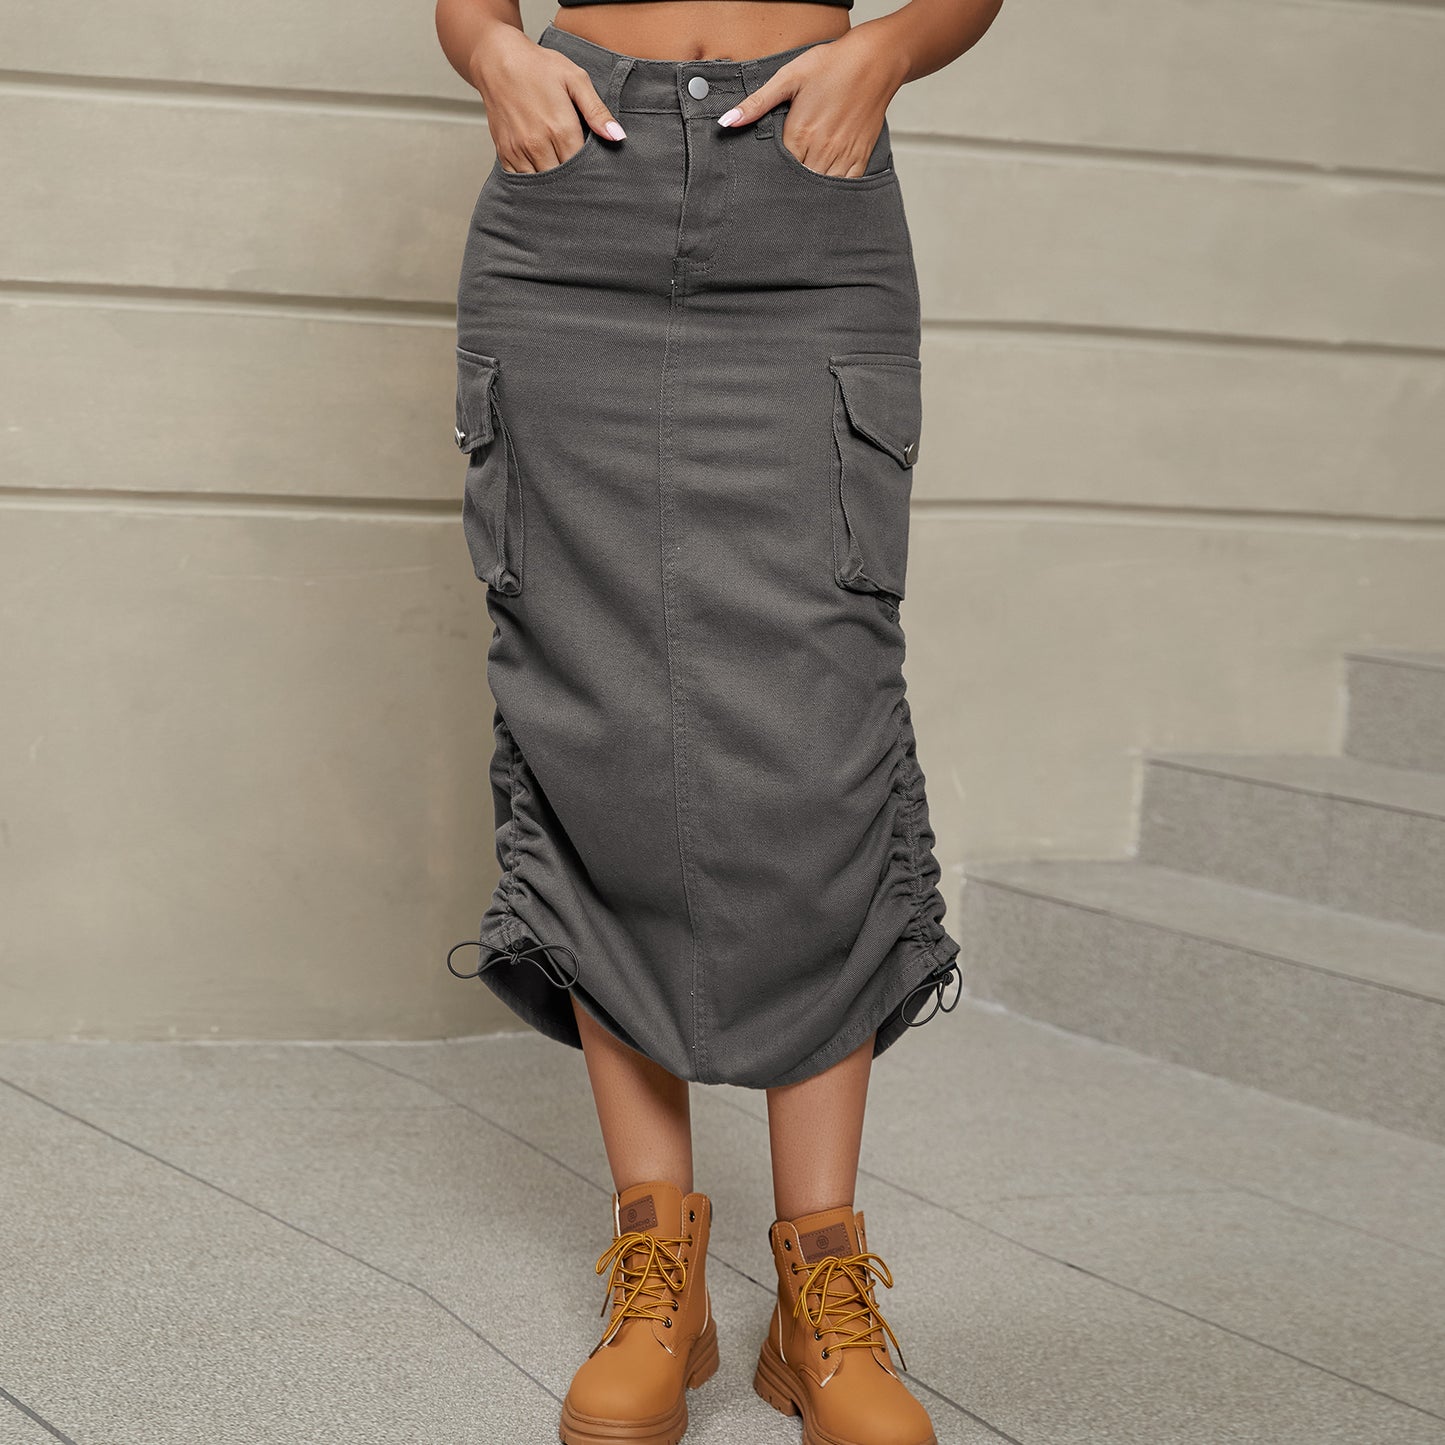 Load image into Gallery viewer, Drawstring Ruched Slit Denim Midi Skirt
